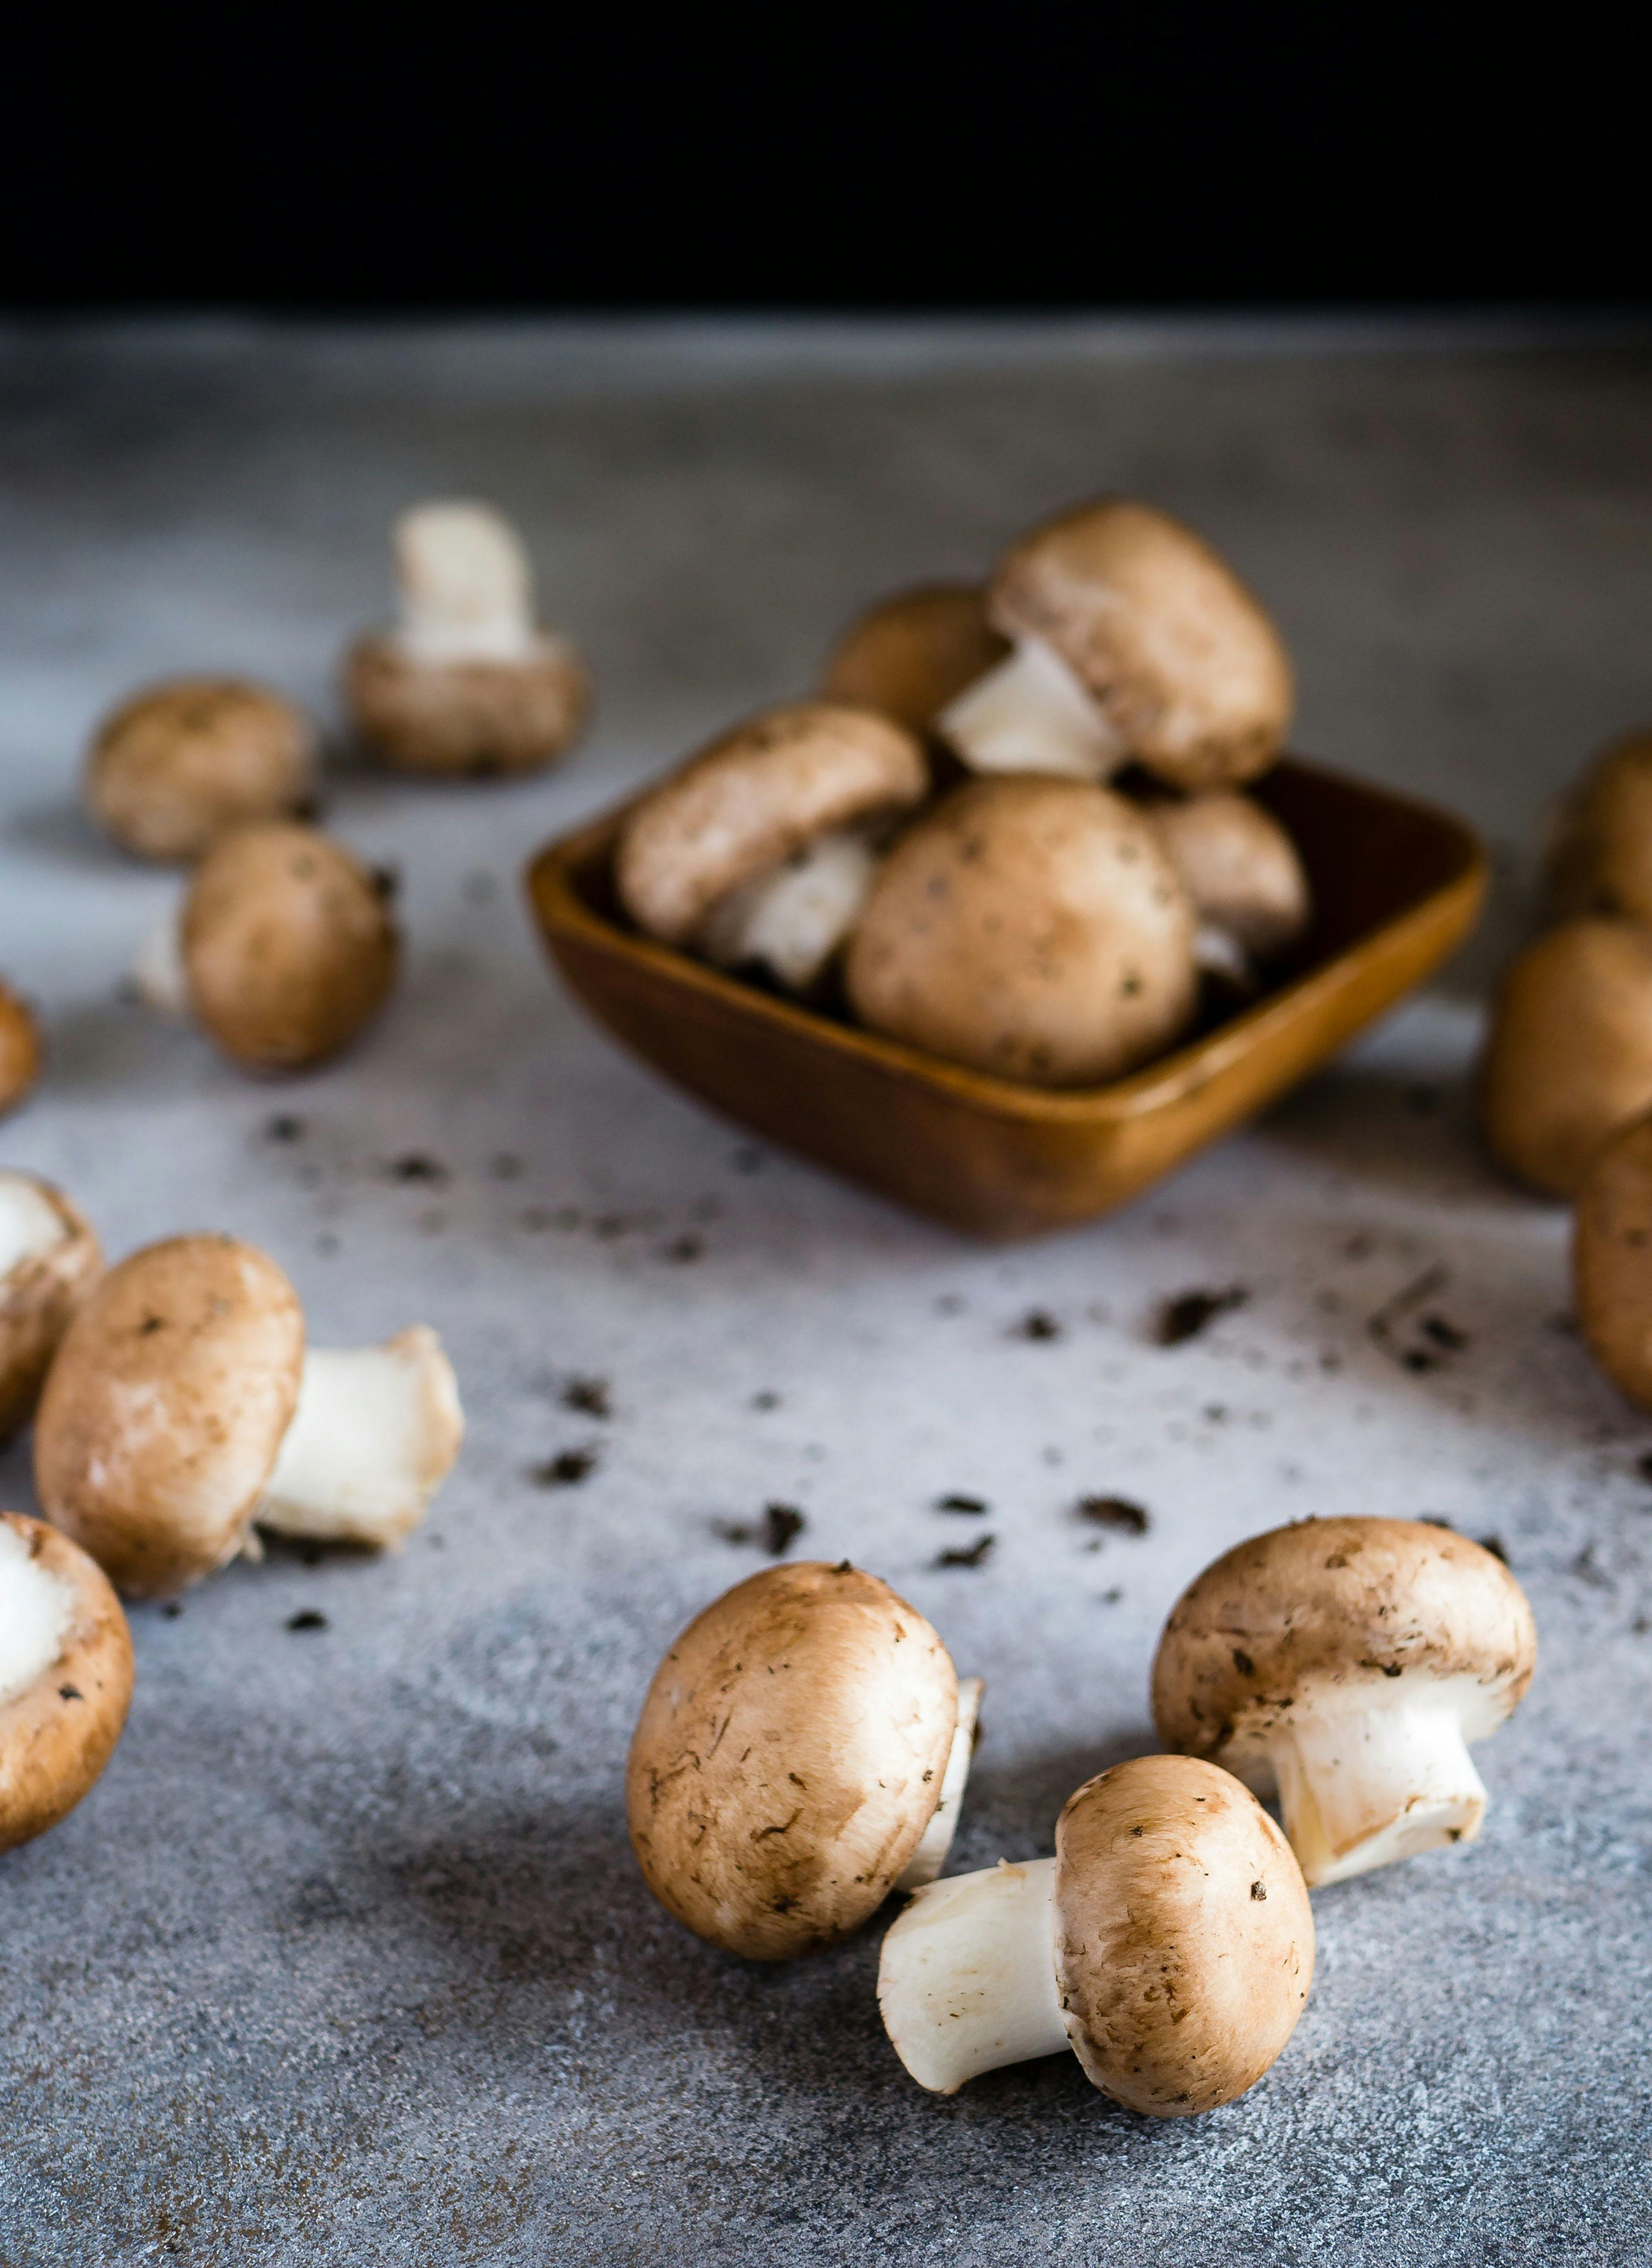 Eating Mushrooms May Reduce Cancer Risk